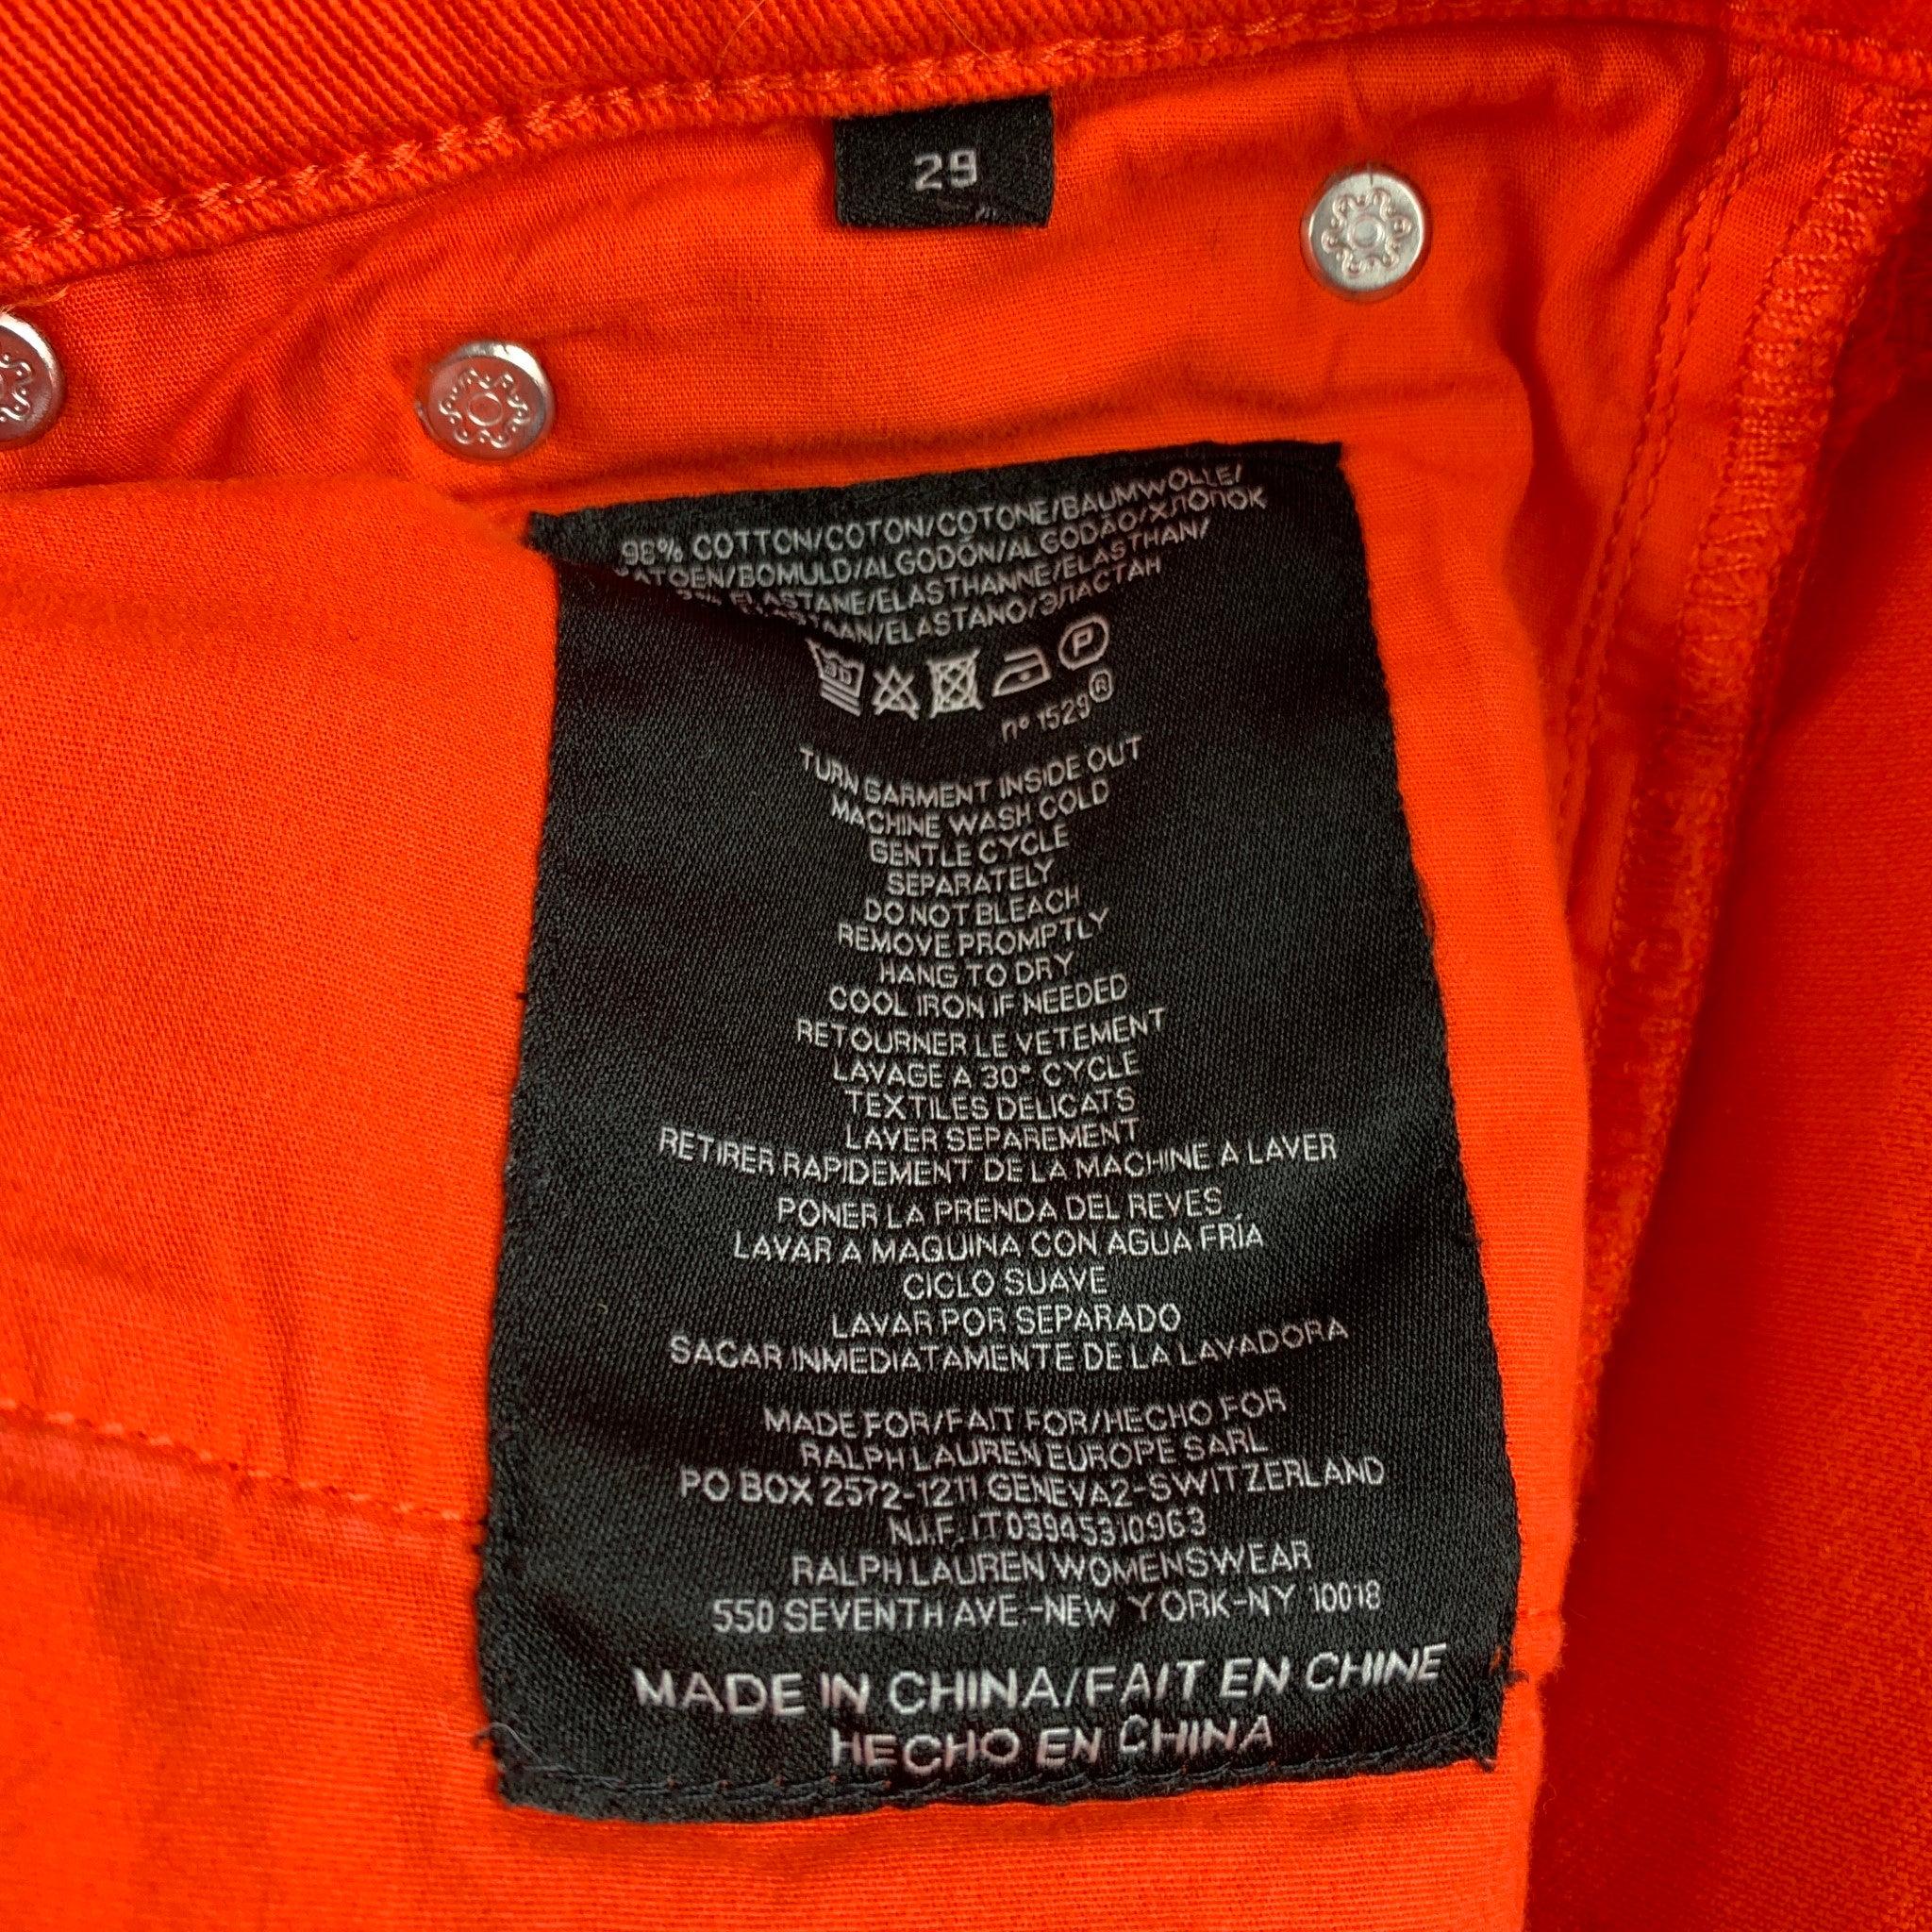 RALPH LAUREN Black Label Size 29 Orange Cotton Skinny Jeans In Good Condition For Sale In San Francisco, CA